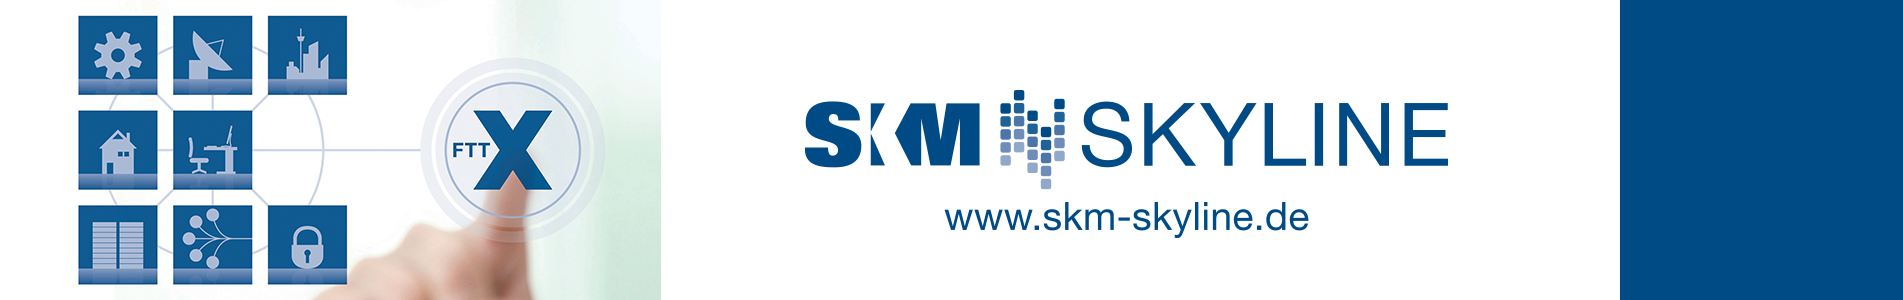 Telenco acquiert l’entreprise allemande SKM Skyline